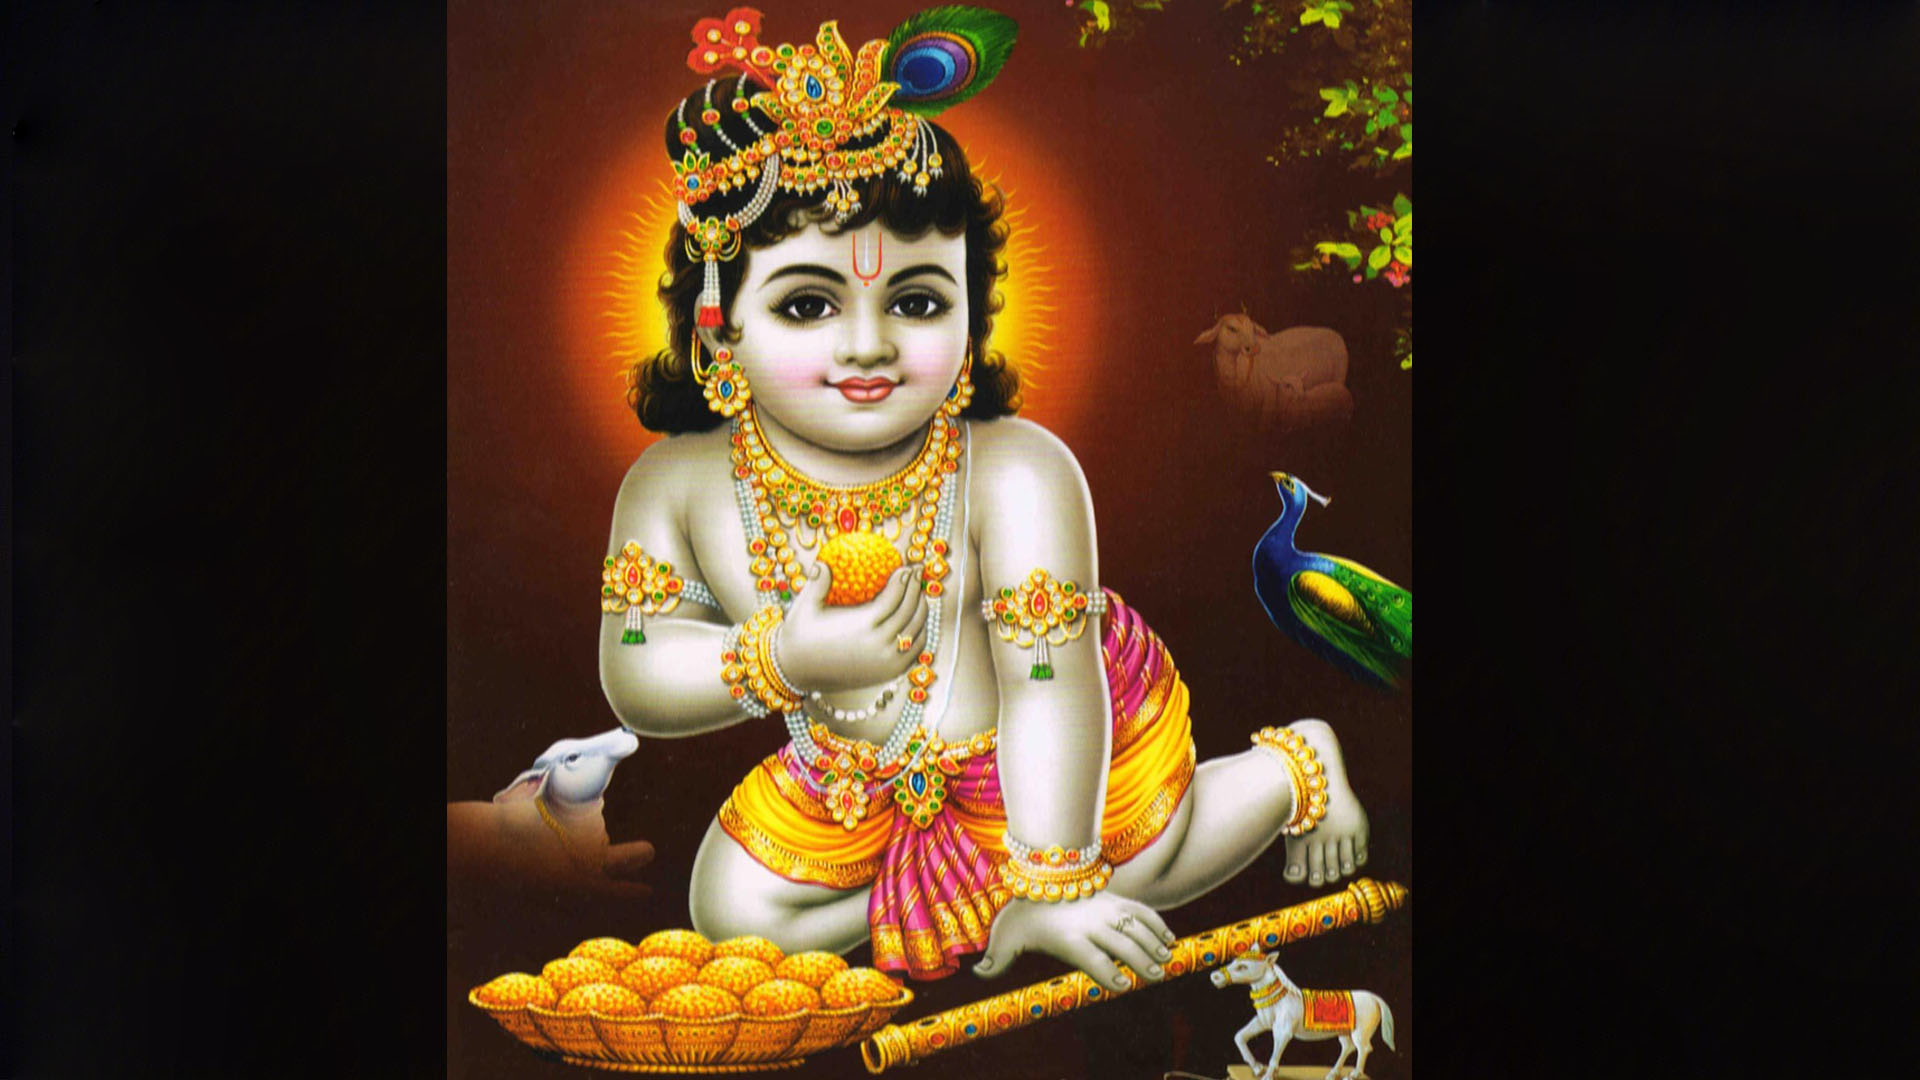 Baby Krishn Images Hd Free Download - Krishna Mobile Wallpaper Full Hd -  1920x1080 Wallpaper 